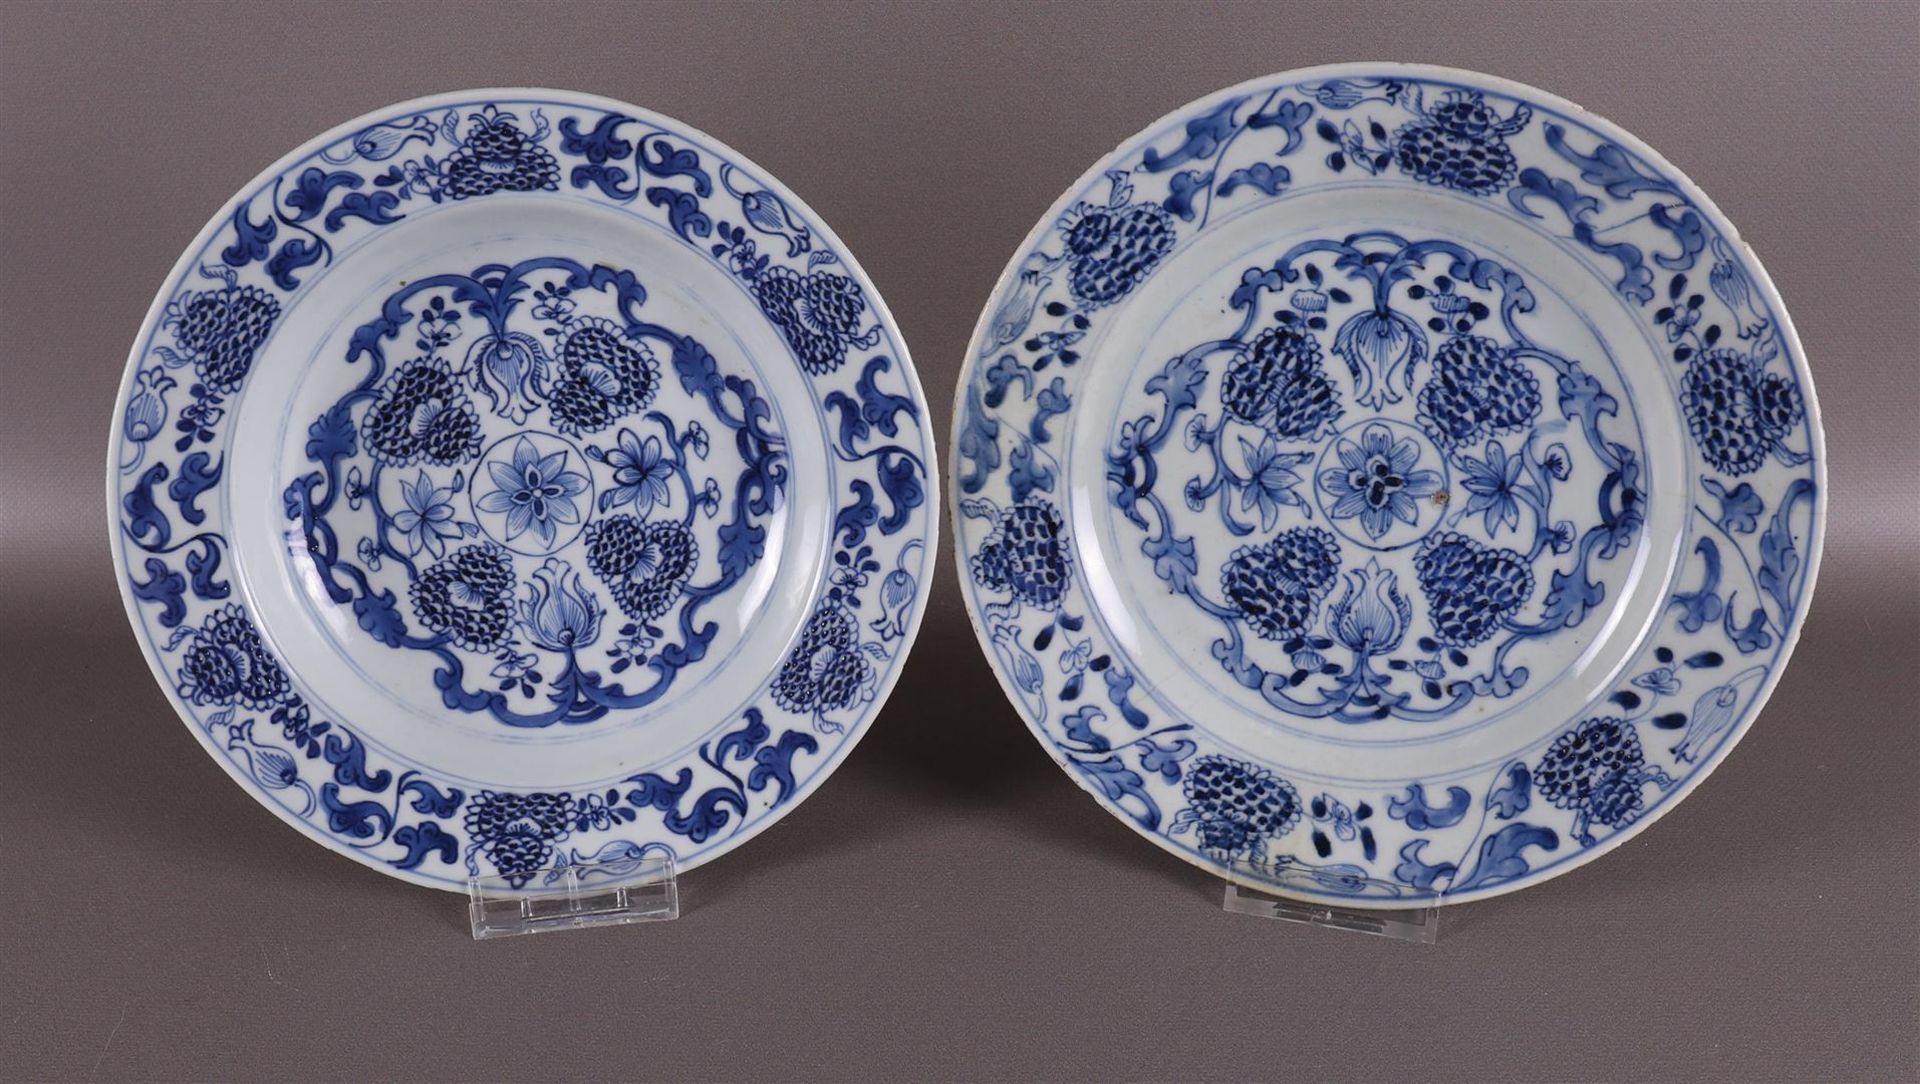 Two various blue/white porcelain plates, China, 18th century. Blue underglaze floral decoration on